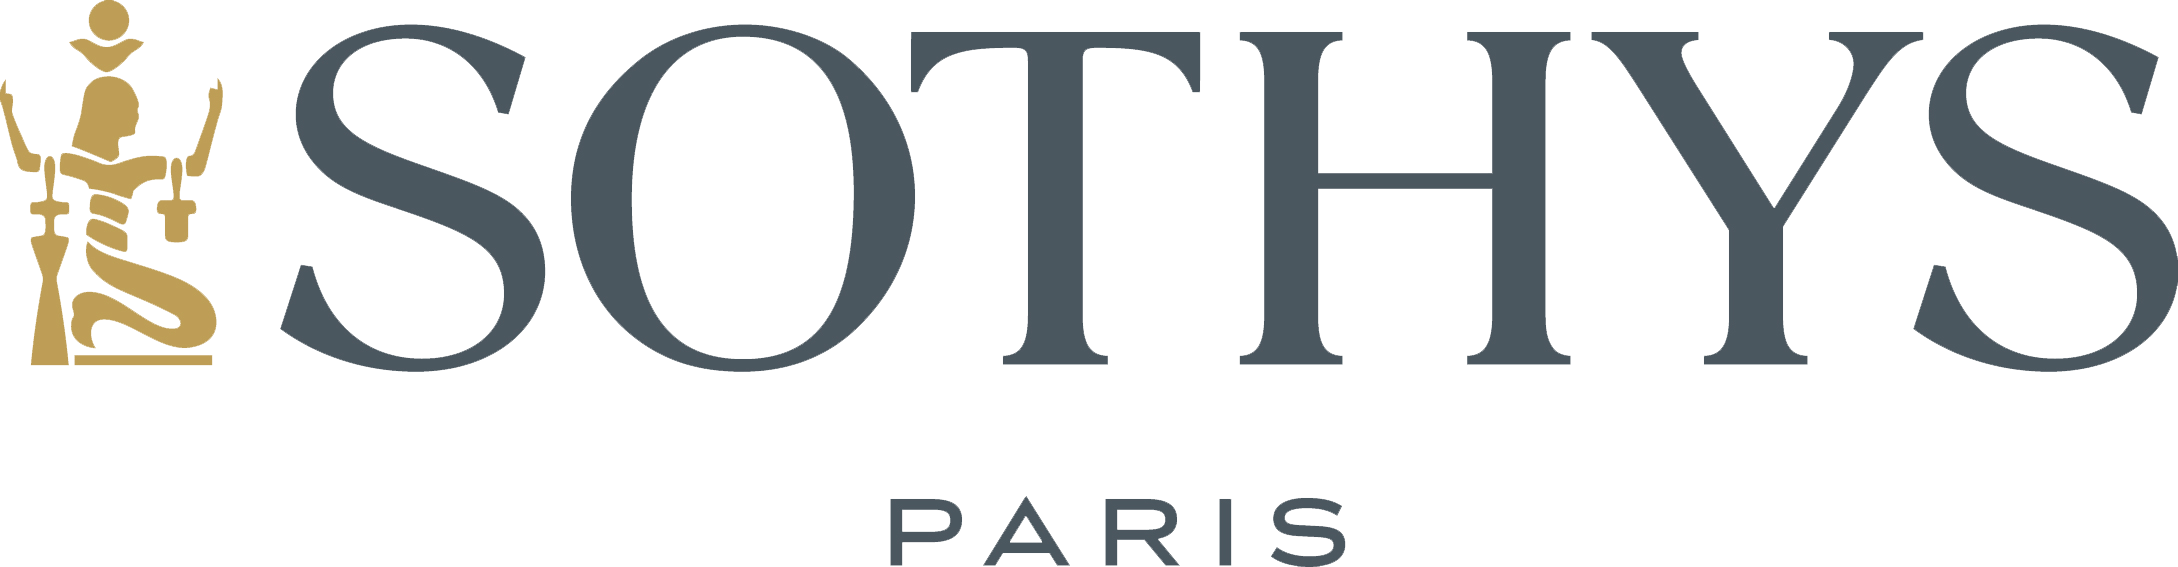 Sothys logo